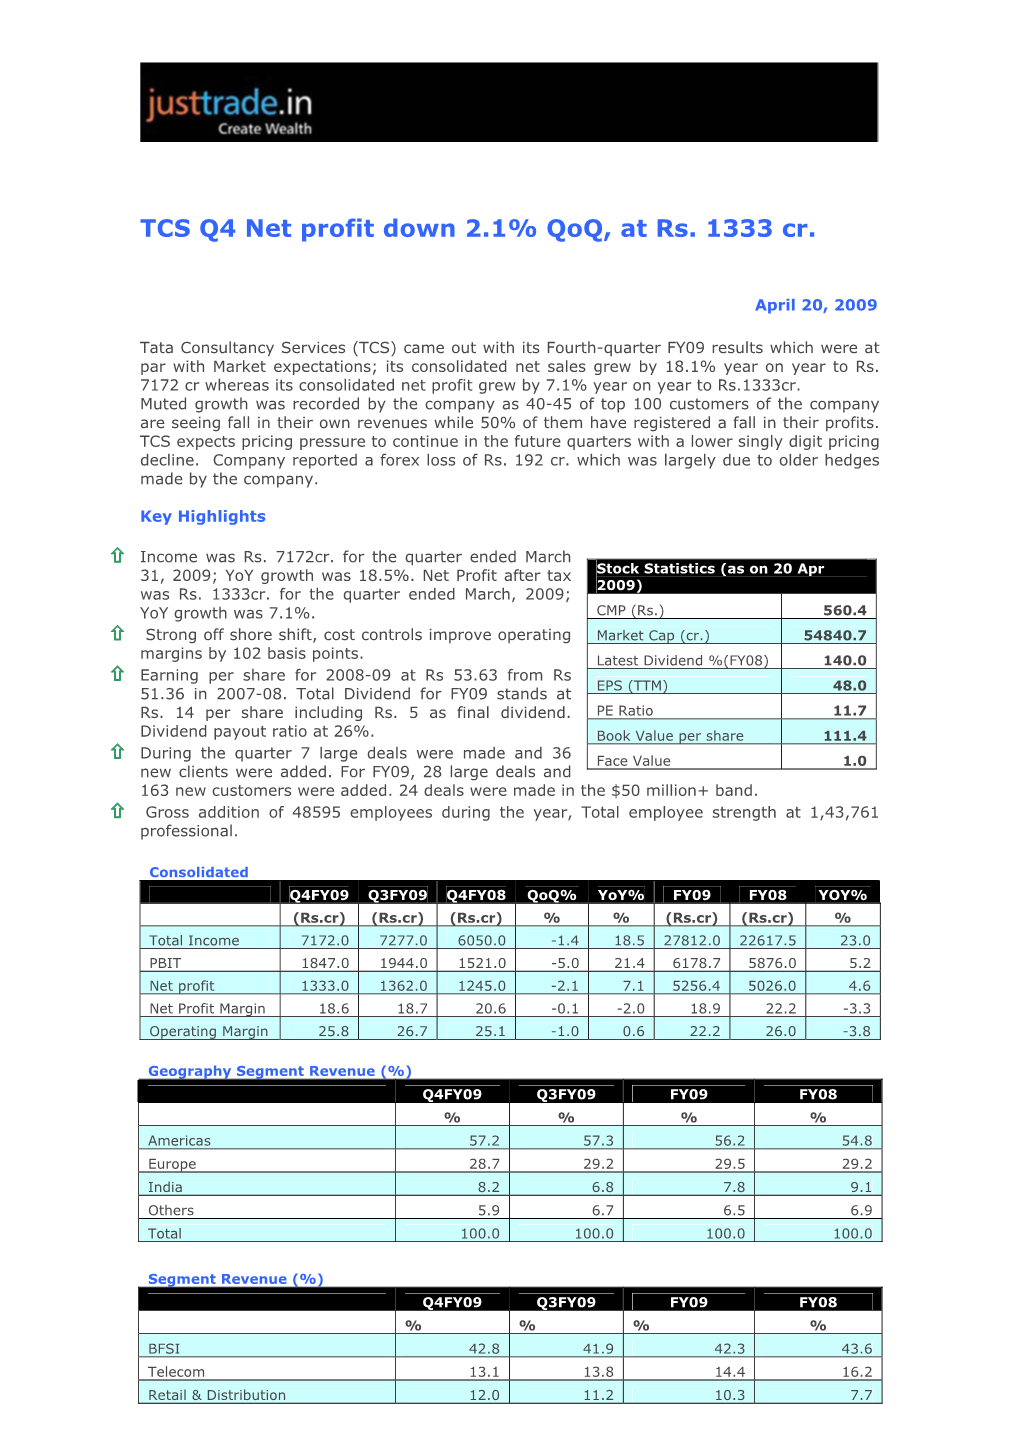 TCS Q4 Net Profit Down 2.1% Qoq, at Rs. 1333 Cr